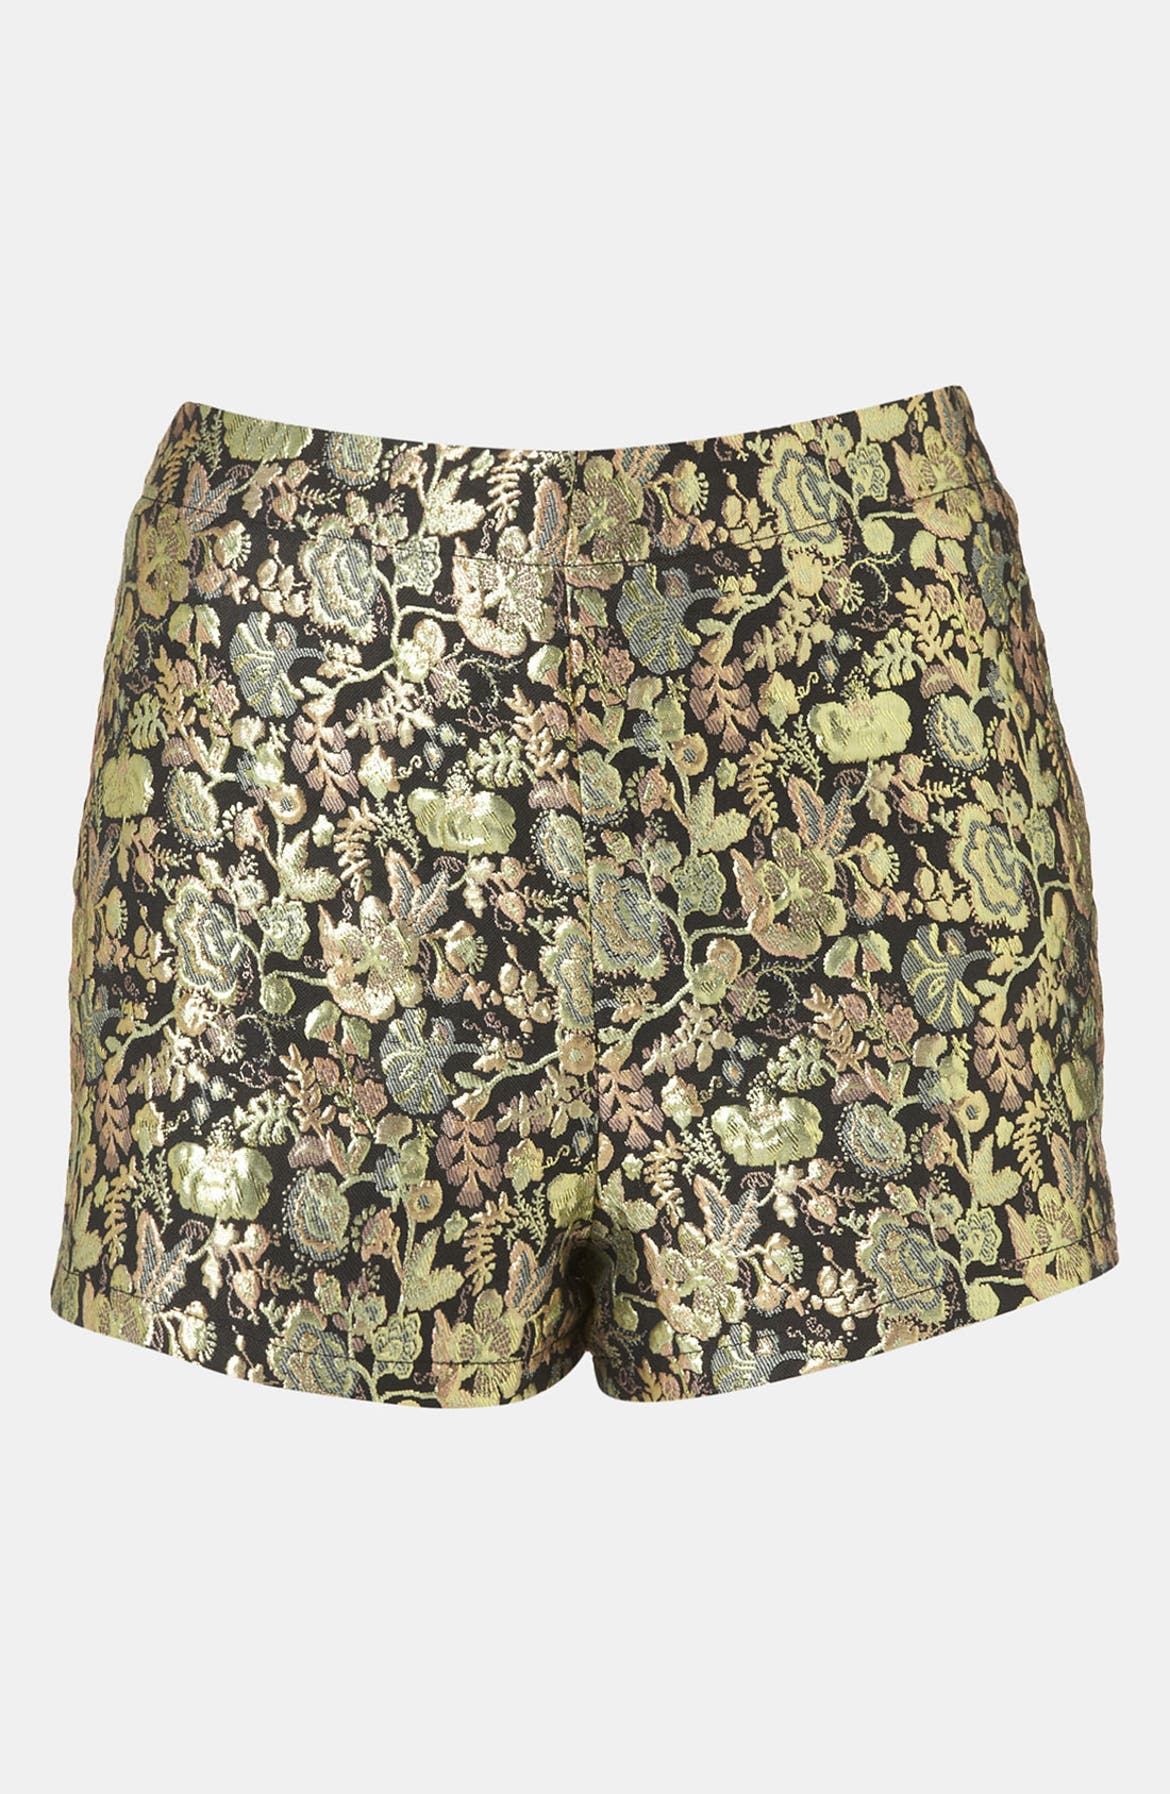 Topshop Metallic Jacquard Shorts | Nordstrom